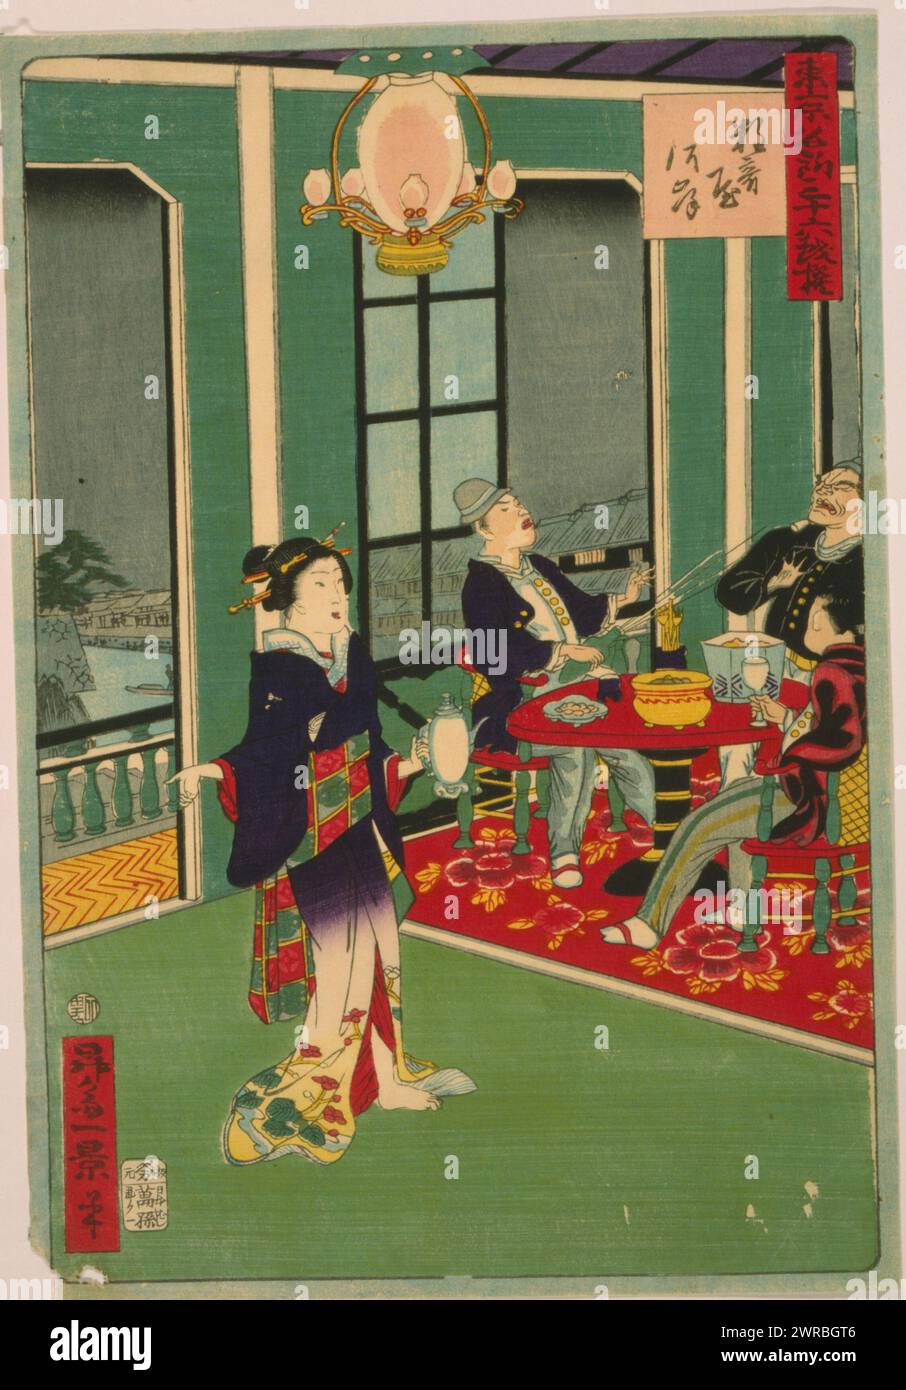 Tōkyō meishō sanjūroku gisen - sukiya ongishi, Japanese print shows a scene with foreigners seated around a dining table in a tea house., Japan: Yorozu Mago (Yorozuya Magobei), 1872., Foreign visitors, Japan, Tokyo, 1870-1880, Woodcuts, Japanese, Color, 1870-1880., Woodcuts, Japanese, Color, 1870-1880, 1 print on hōsho paper: woodcut, color, 33 x 22 cm. (block), 34 x 23.4 cm. (sheet Stock Photo